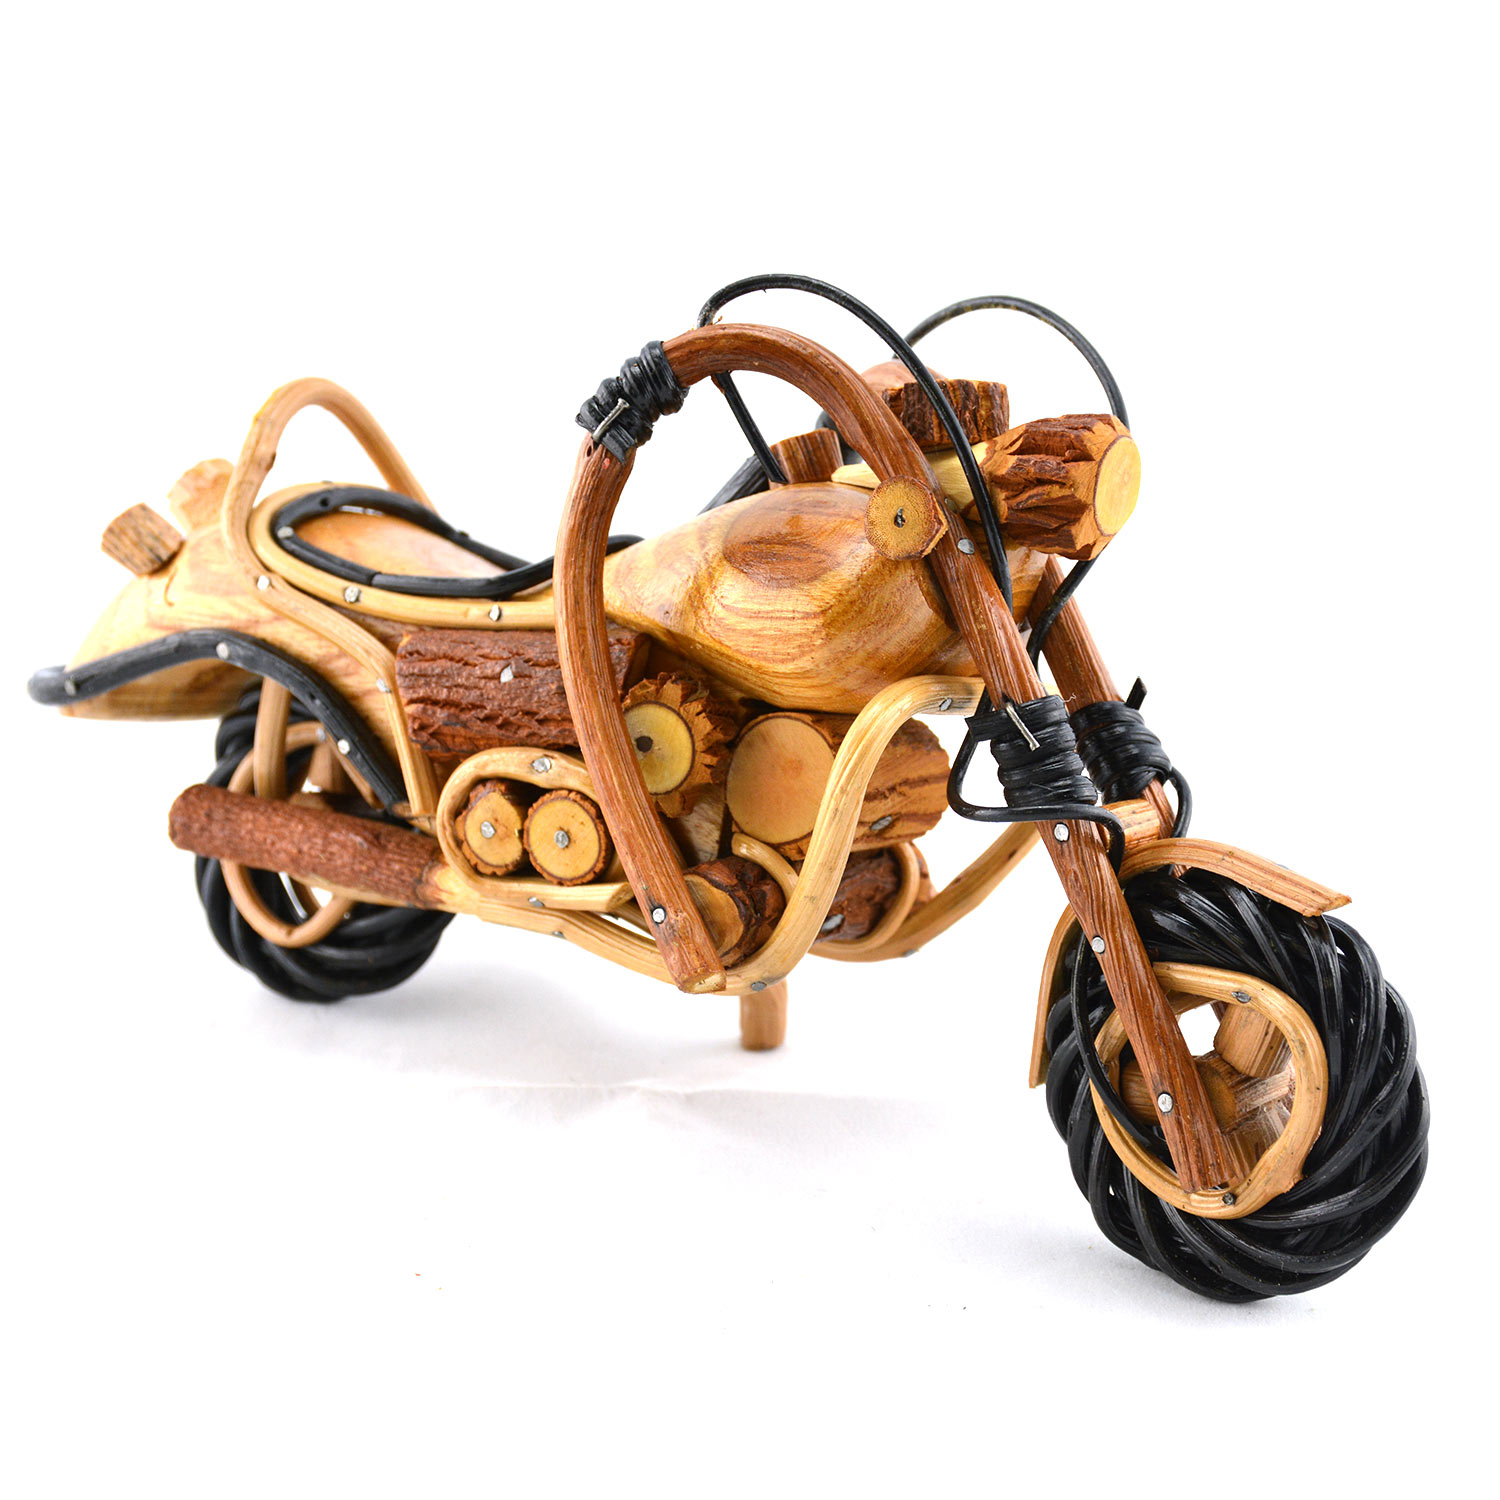 Wooden Cruiser Motorcycle Model Handmade